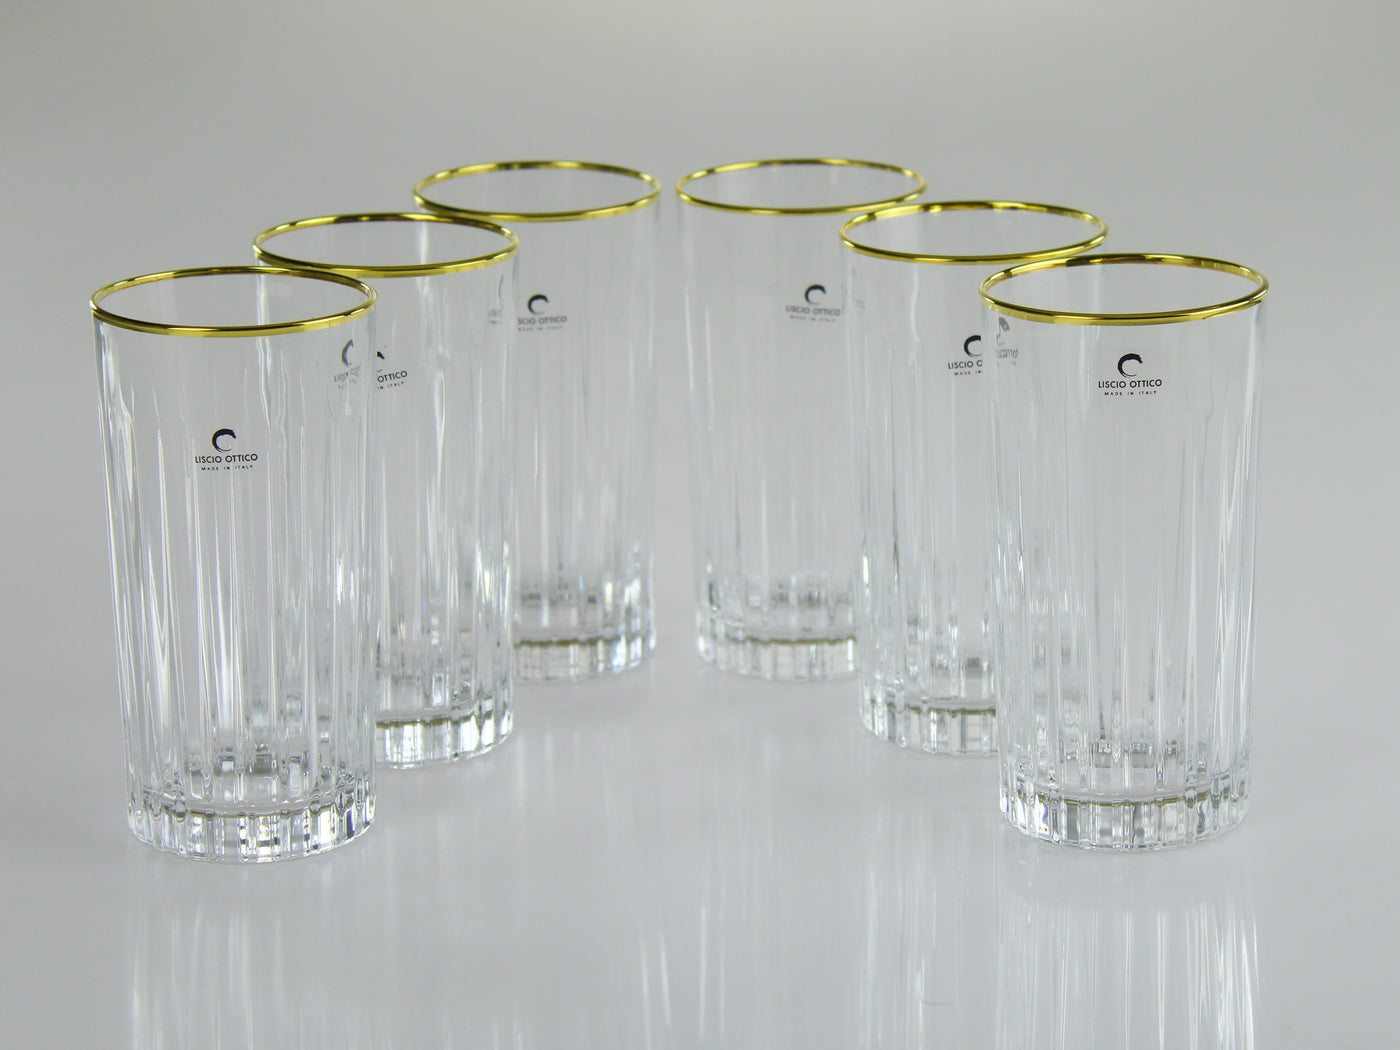 Liscio Ottico - Set of 6 Highball Glasses with Linear Design and Gold Rim